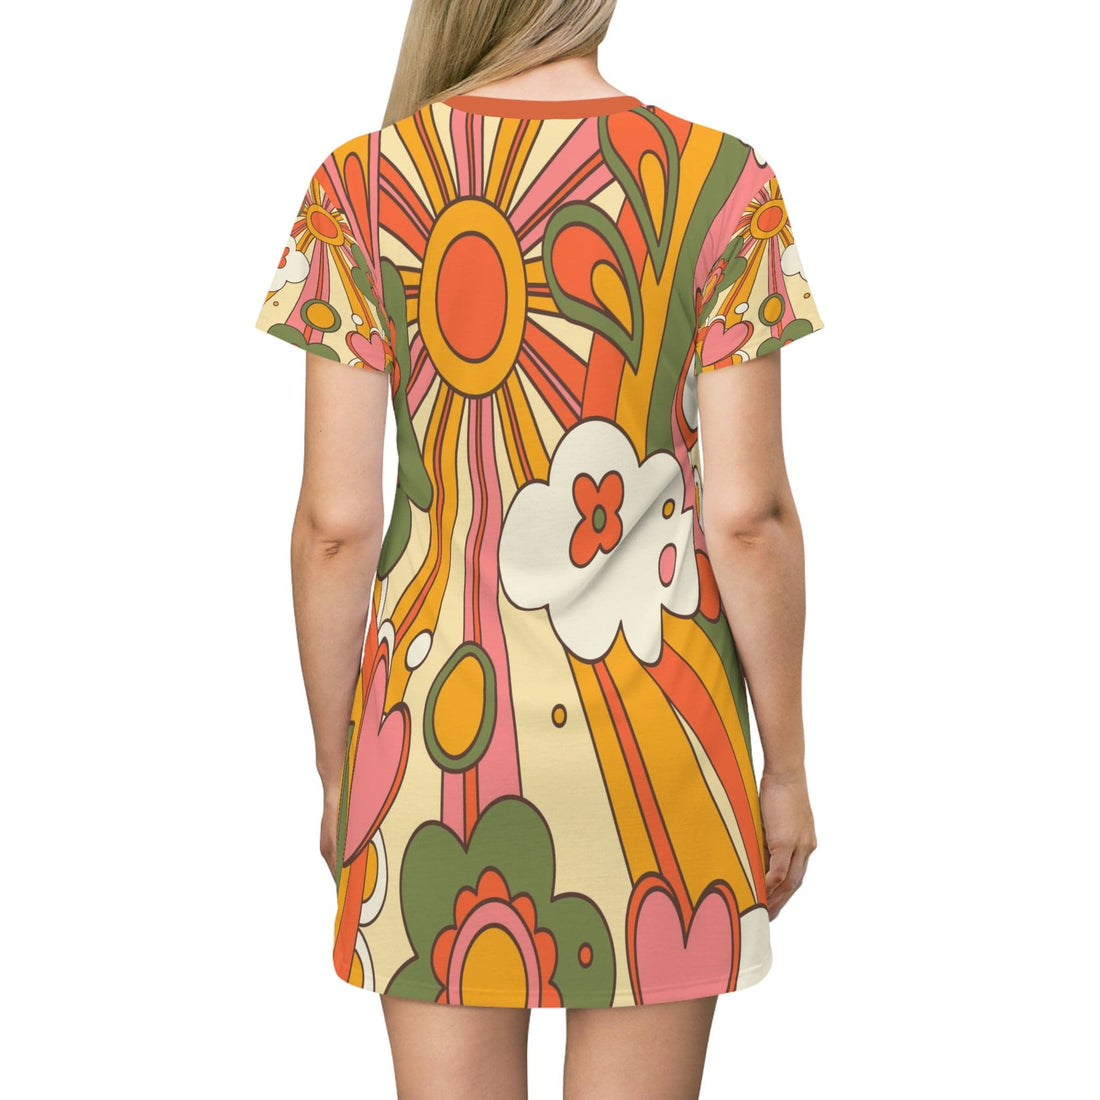 Kate McEnroe New York Retro Groovy Hippie 70s Sunburst T - Shirt Dress in Mid Century Modern Burnt Orange, Mustard Yellow, Green, Summer Party Dress, Hippie GiftsDresses23882618526880173861